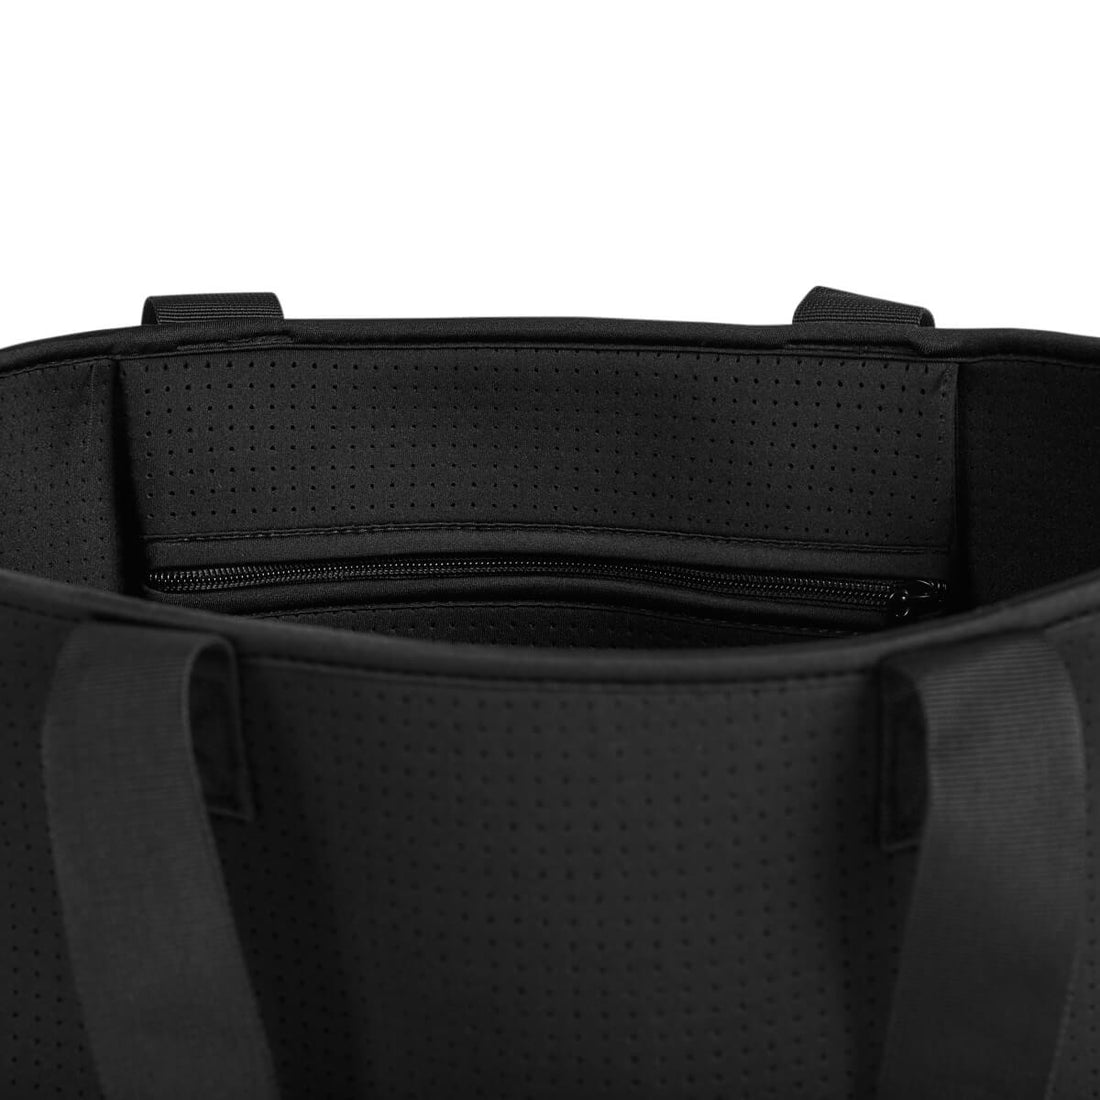 Black neoprene bag close up of zipper